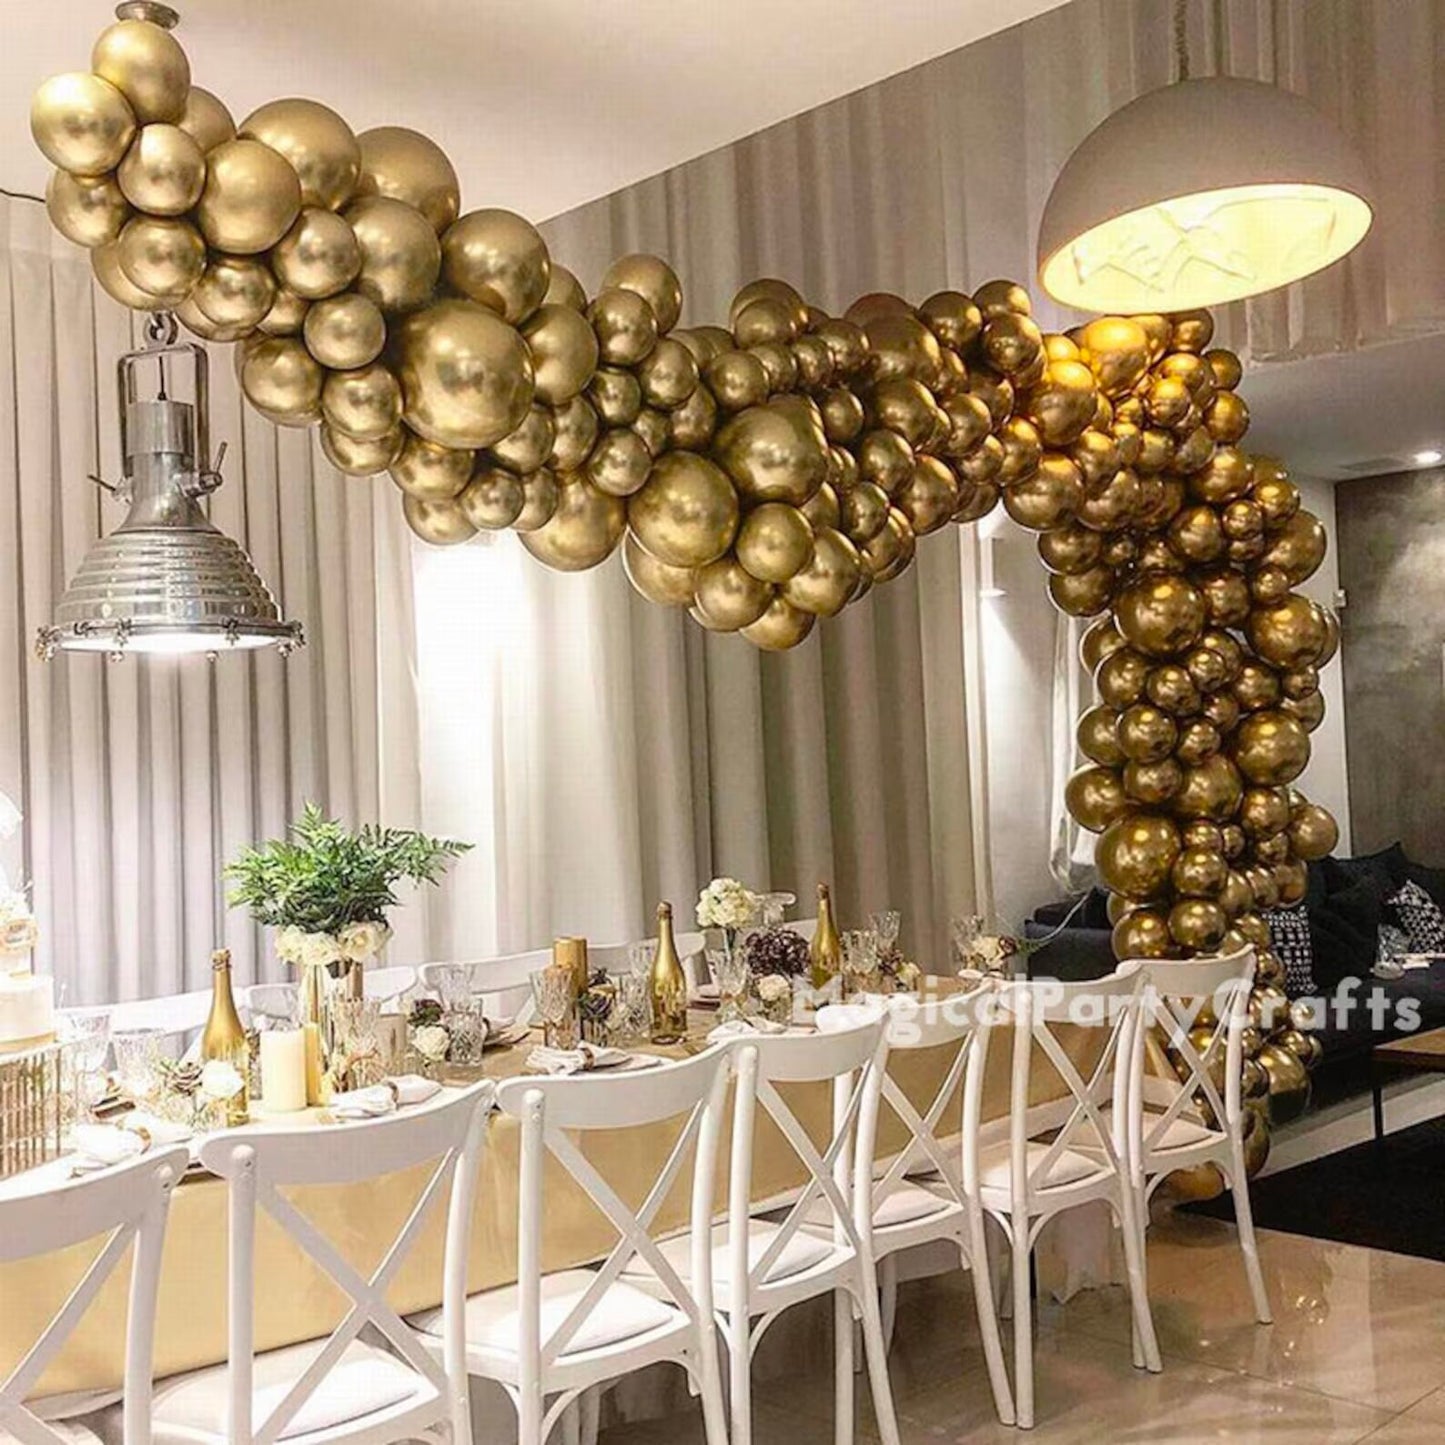 103Pcs Gold Metallic Balloon Garland Arch Kit | Grand Opening Wedding Anniversary Baby Shower Birthday Party Decorations